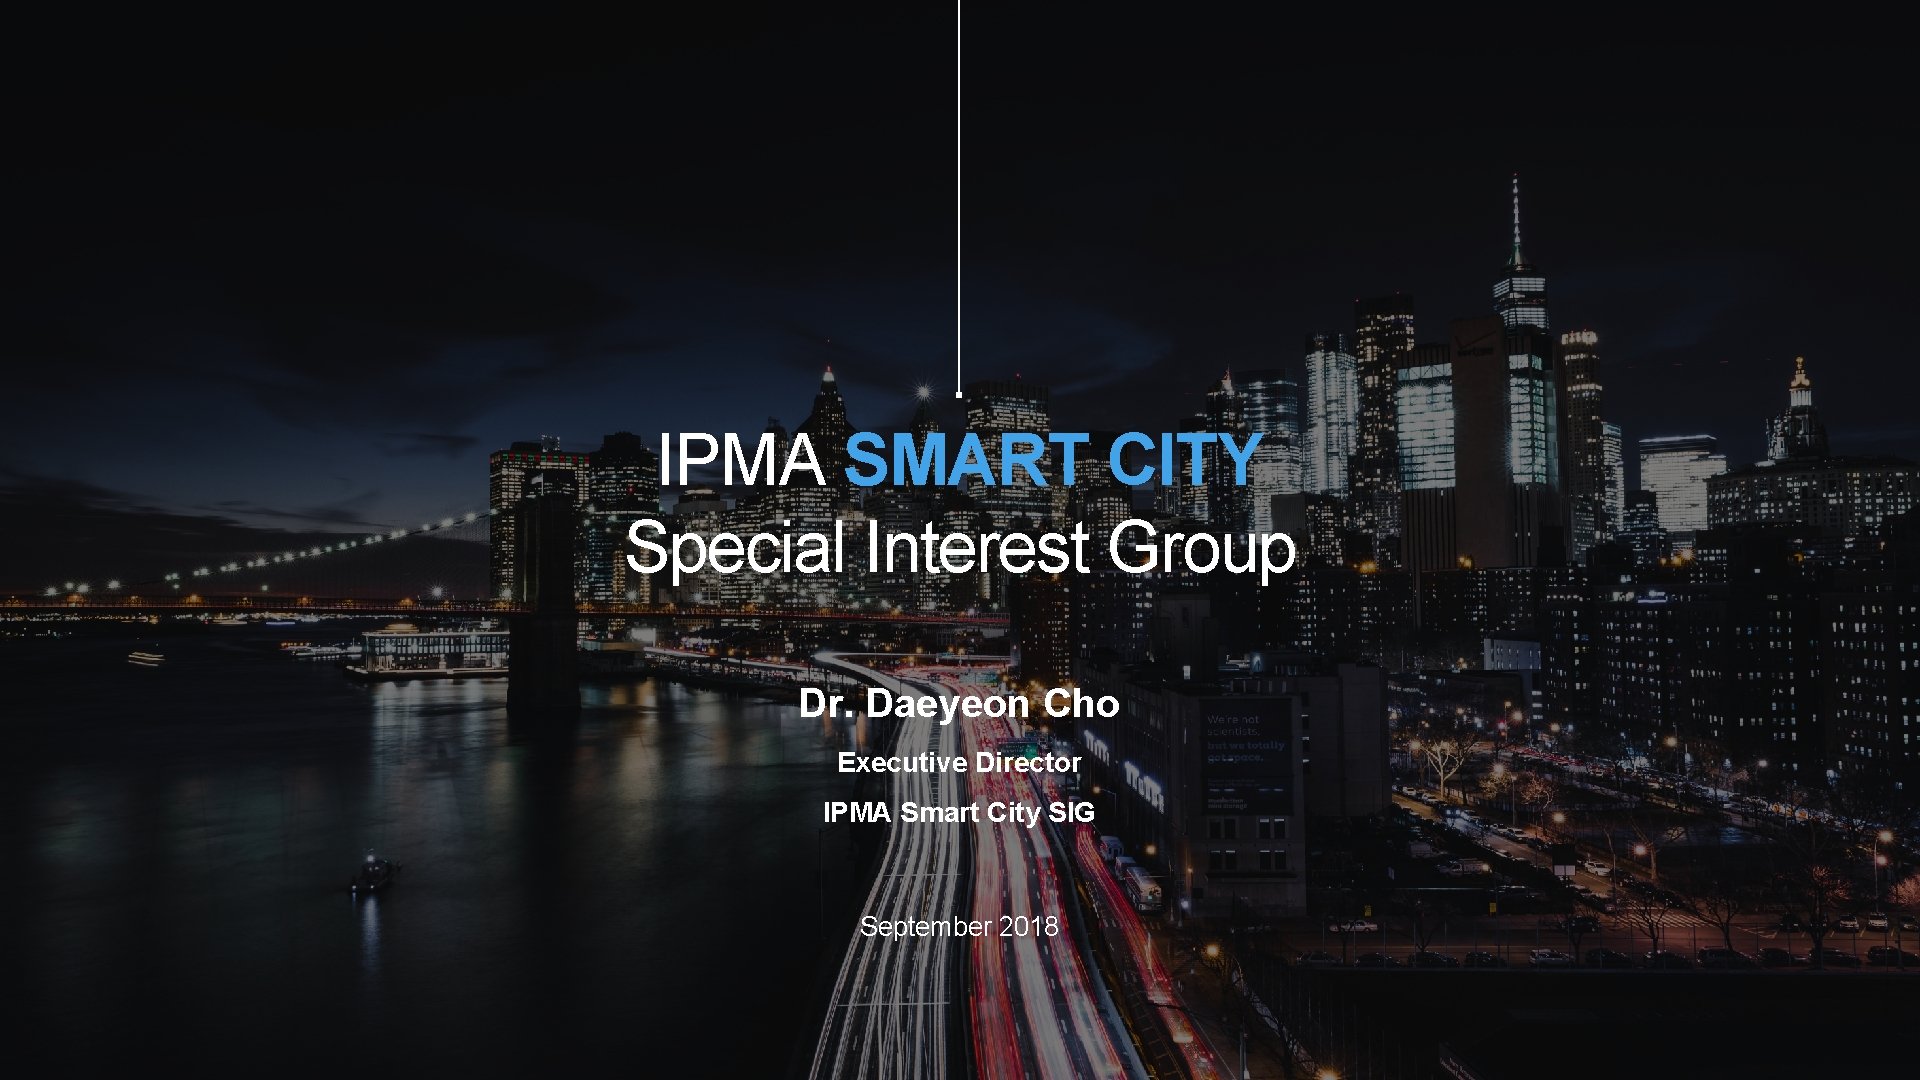 IPMA SMART CITY Special Interest Group Dr. Daeyeon Cho Executive Director IPMA Smart City